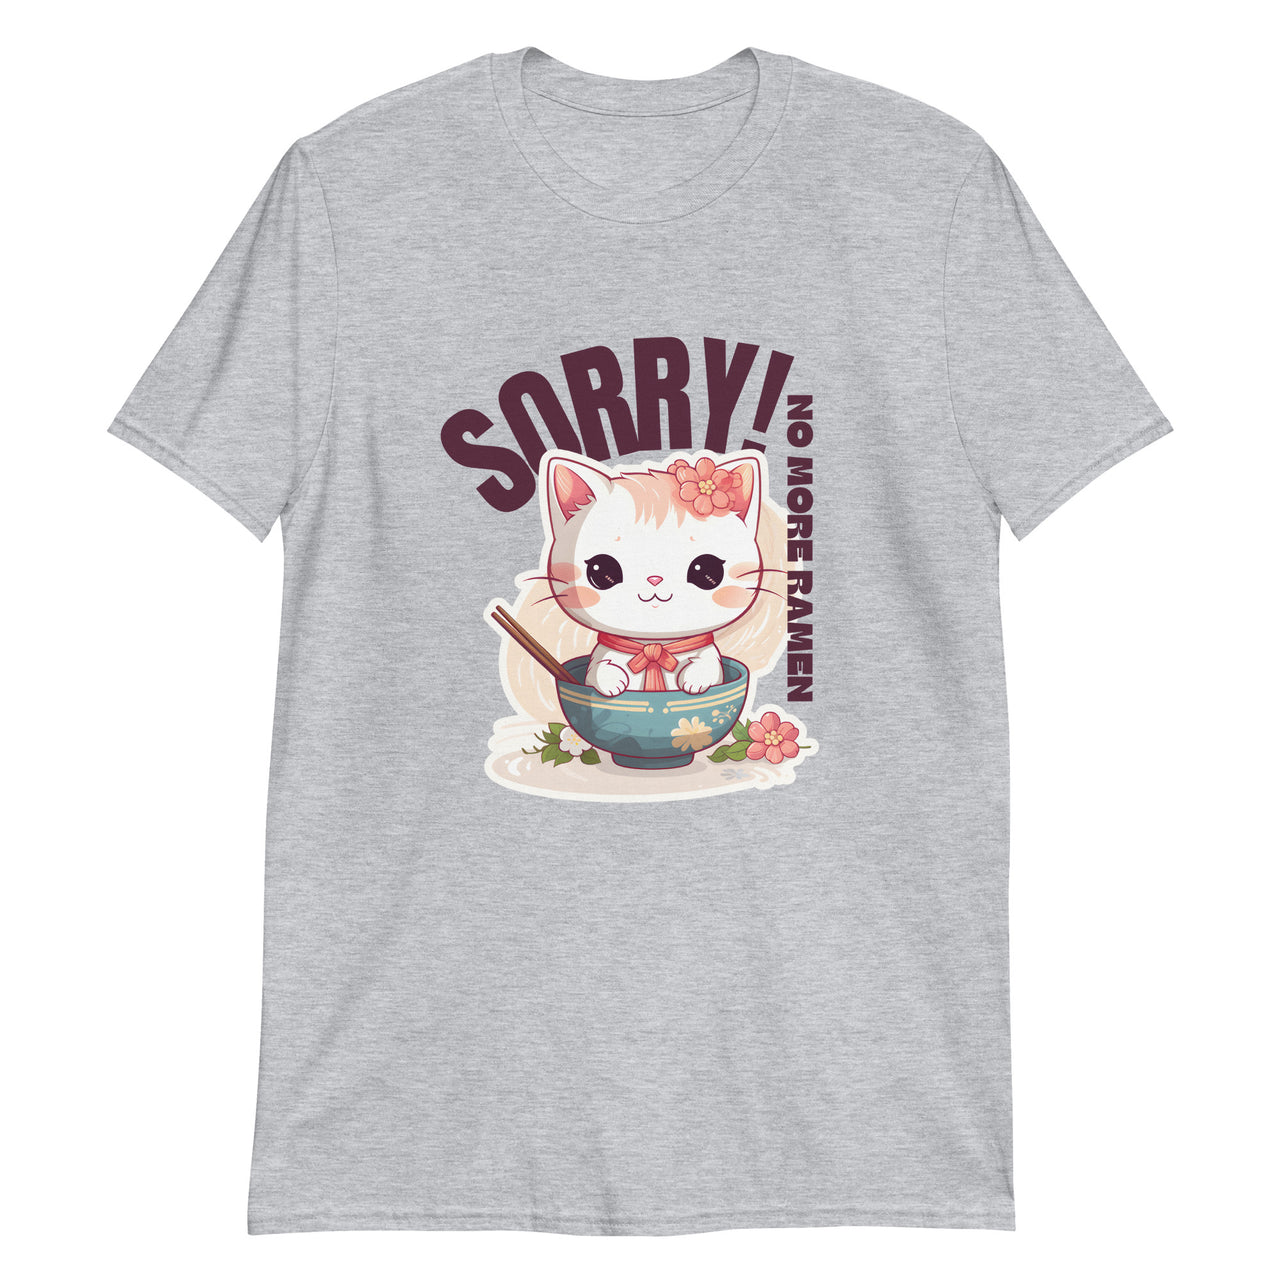 Sorry, No More Ramen: Anime Cat in Bowl T-Shirt